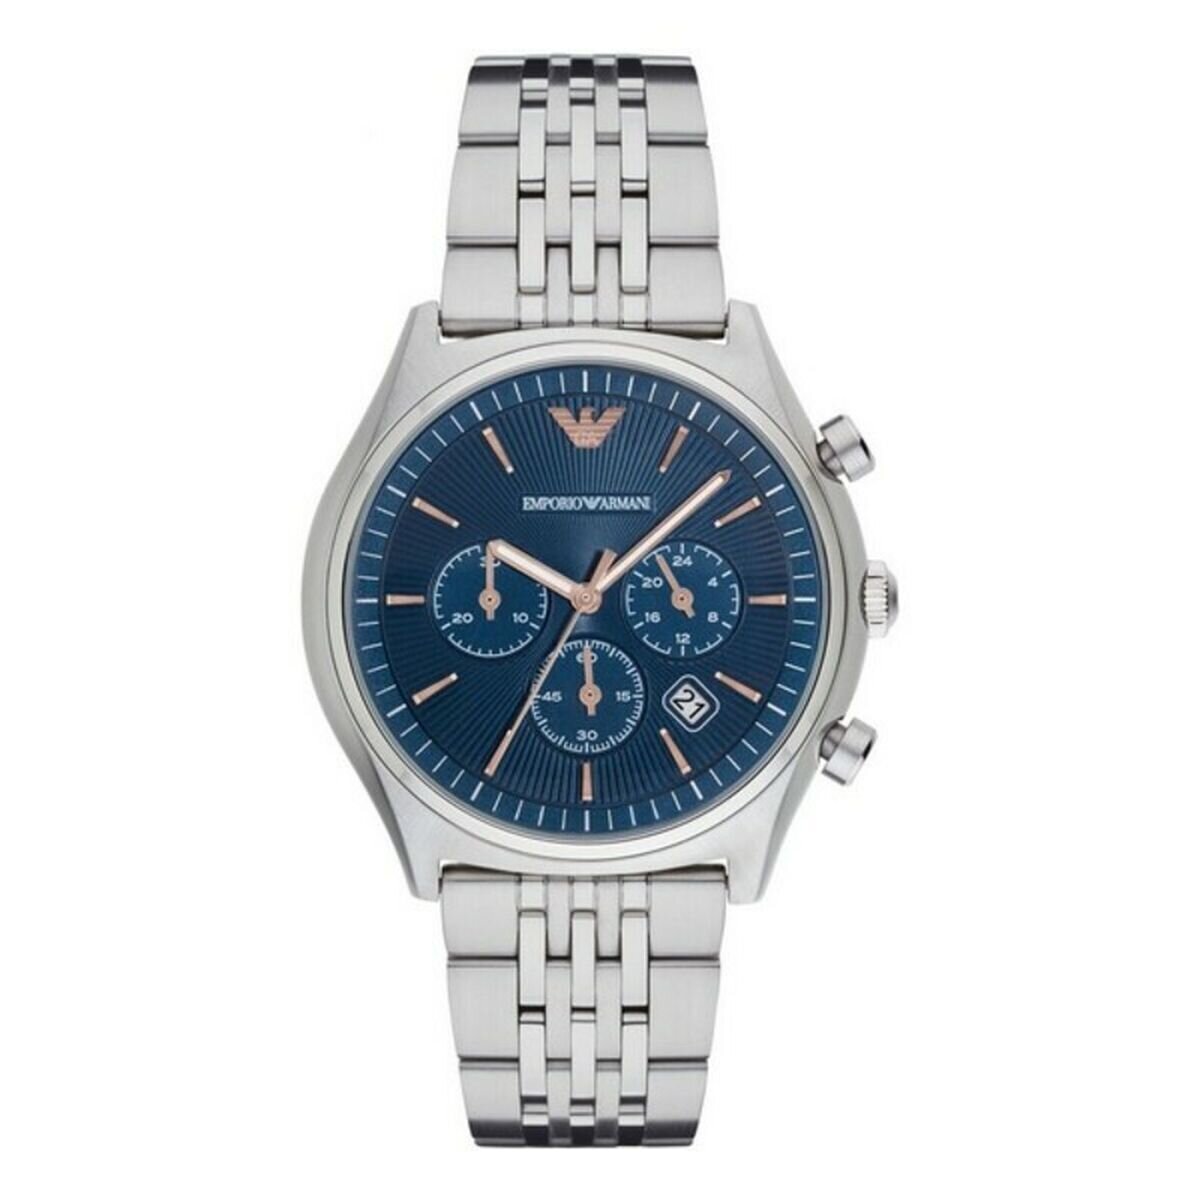 Mens Silver & Blue Chronograph Armani Watch